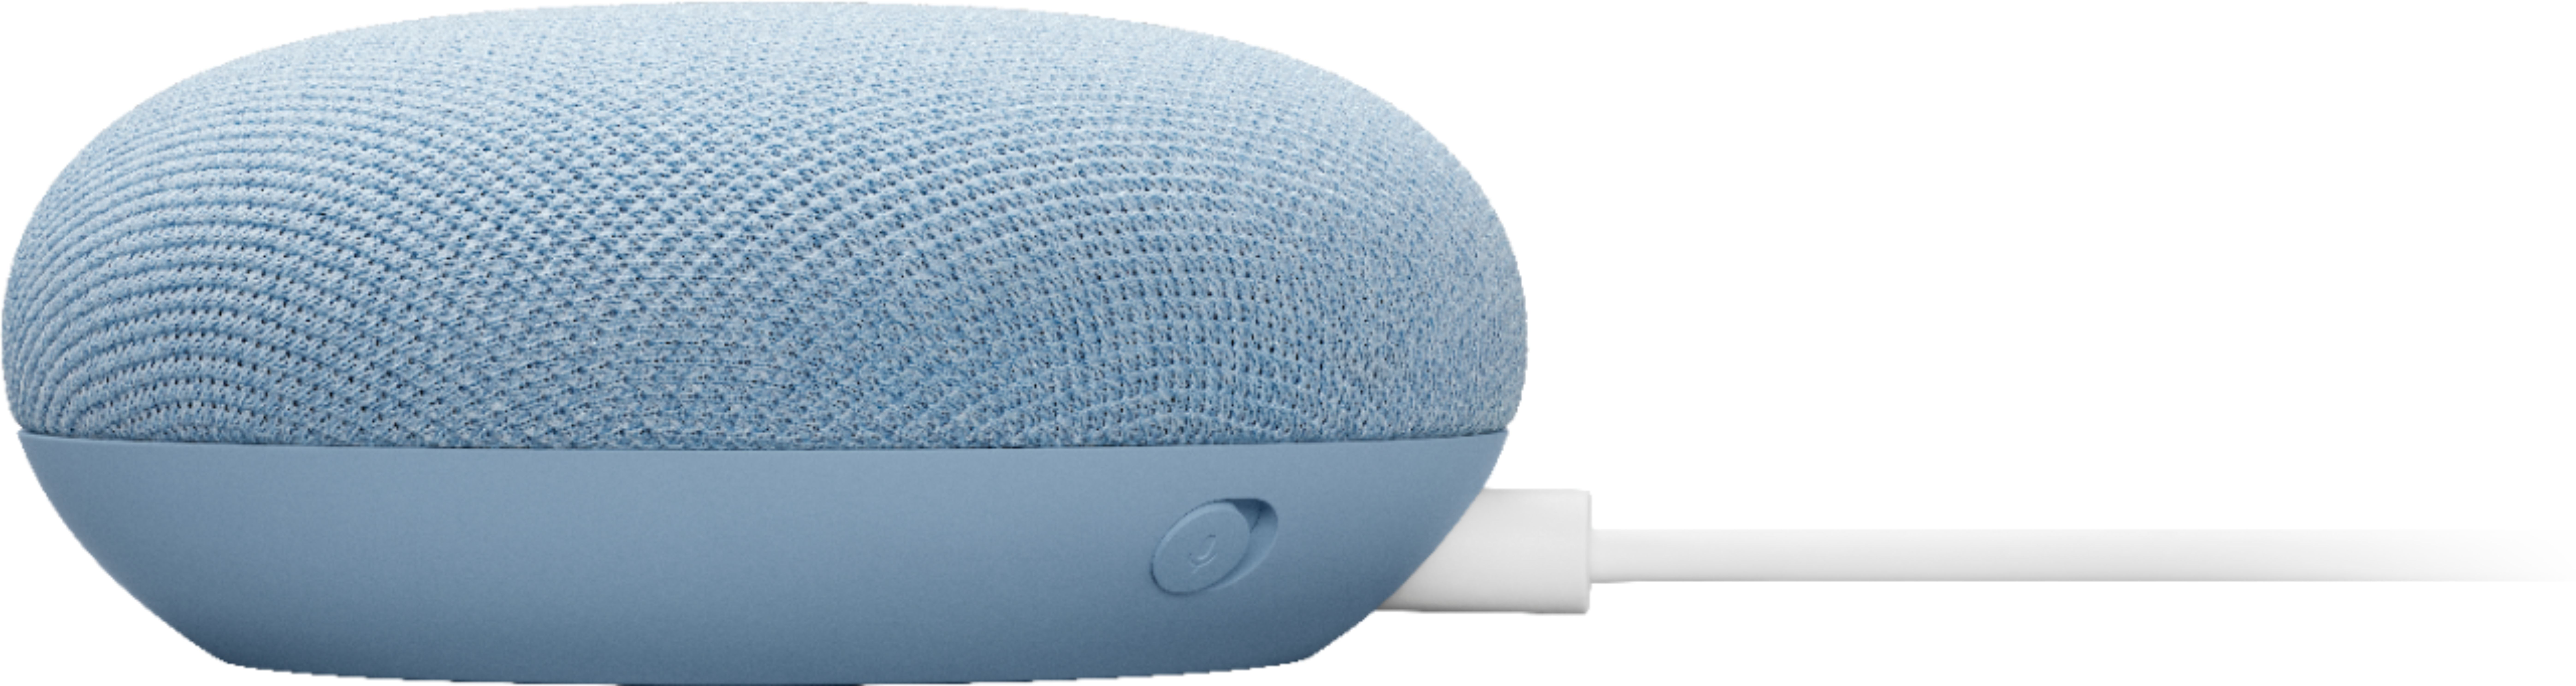 Google Nest Mini - 2nd Gen Smart Speaker GA01141-US with Google